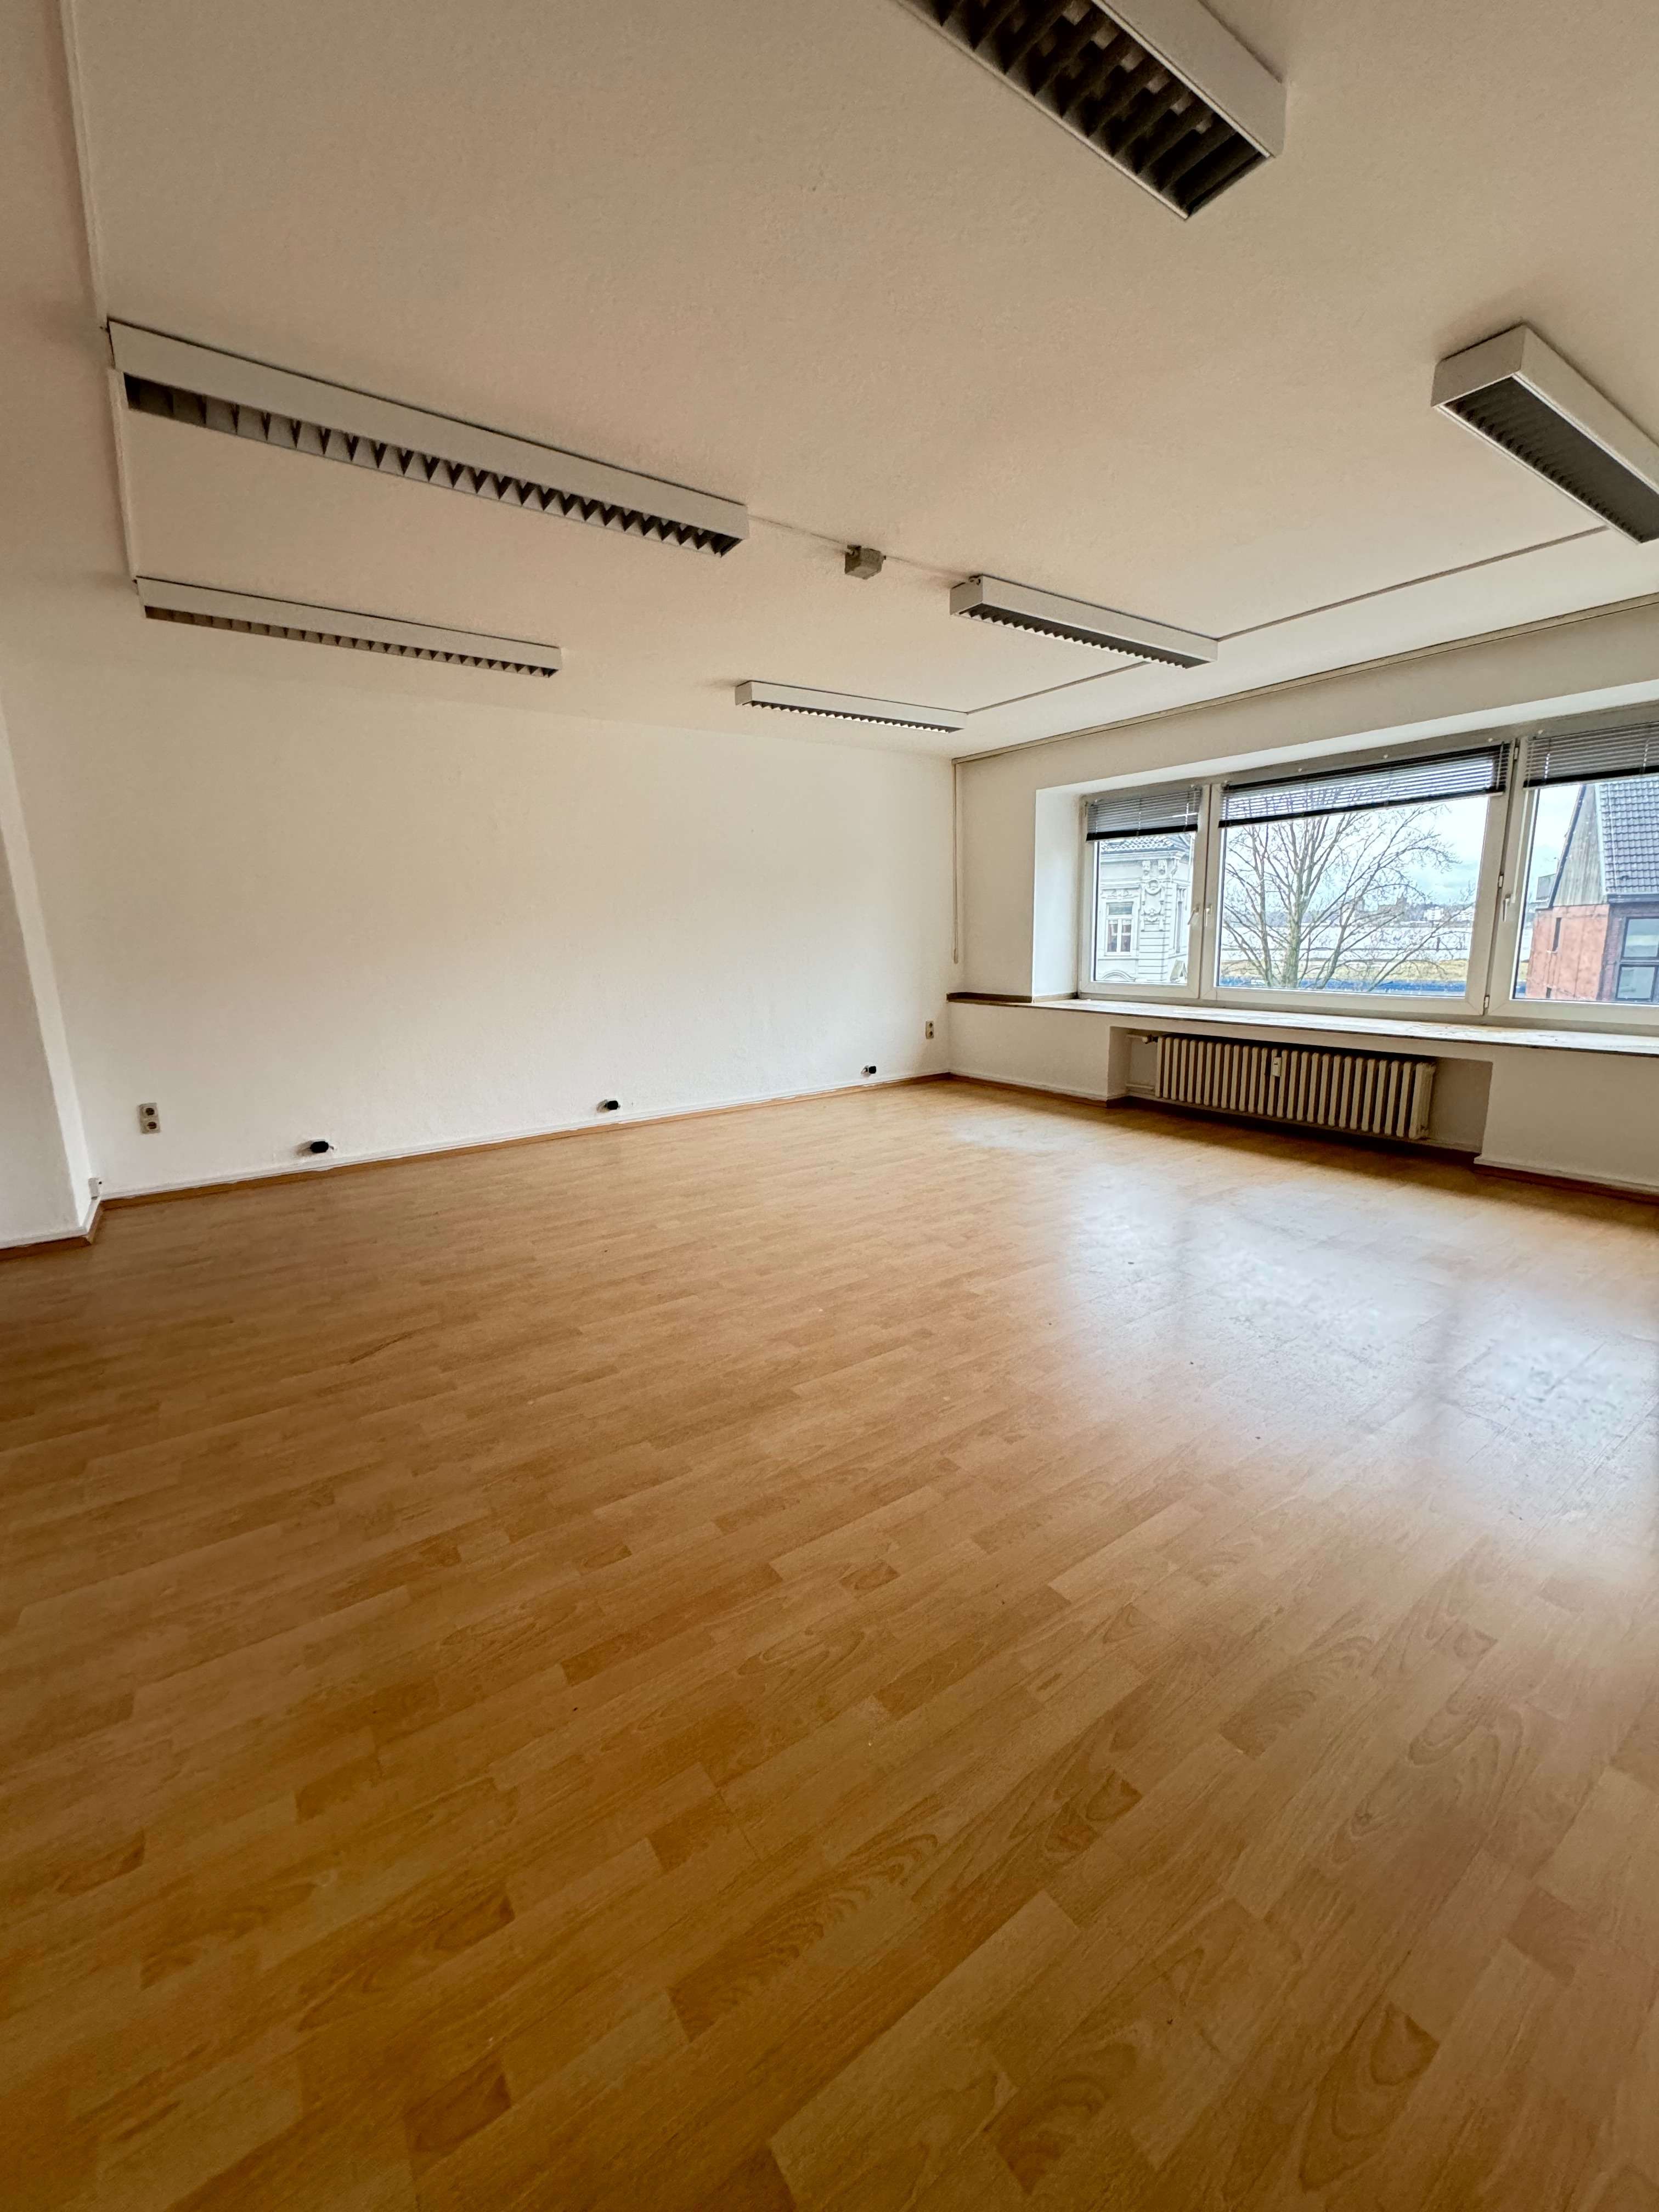 Büro in Duisburg 650,00 € 130 m²